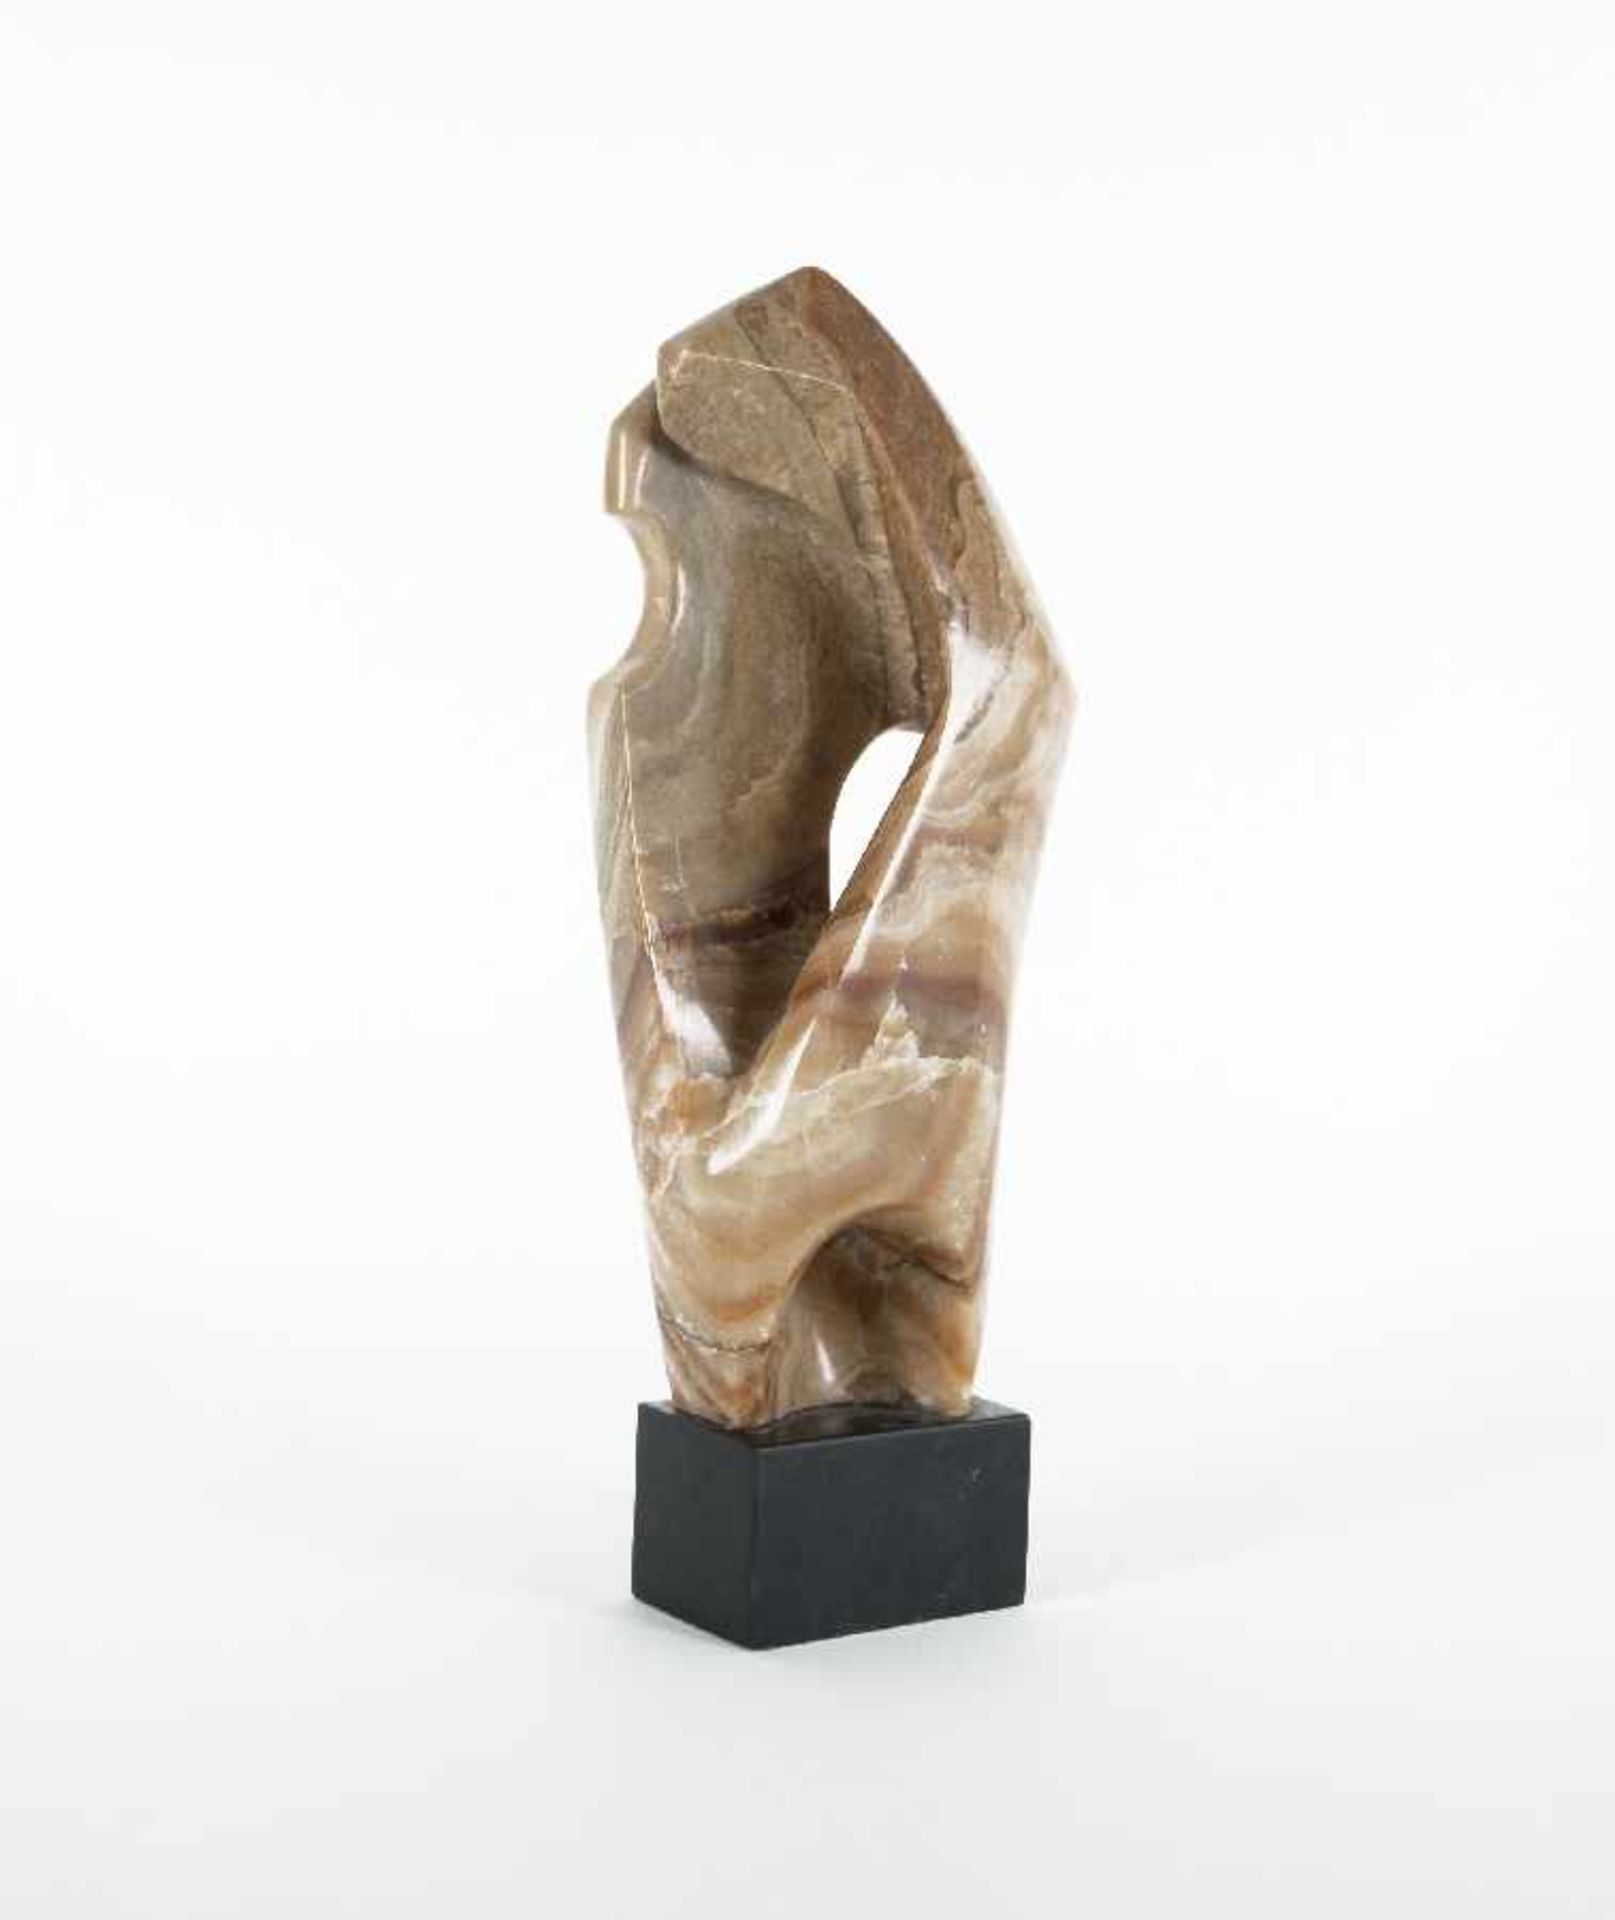 Nardo DunchiCarrara 1914 - 2010UntitledYellow marble; H 35 cm, W 15 cm, D 8 cm; Provenance: